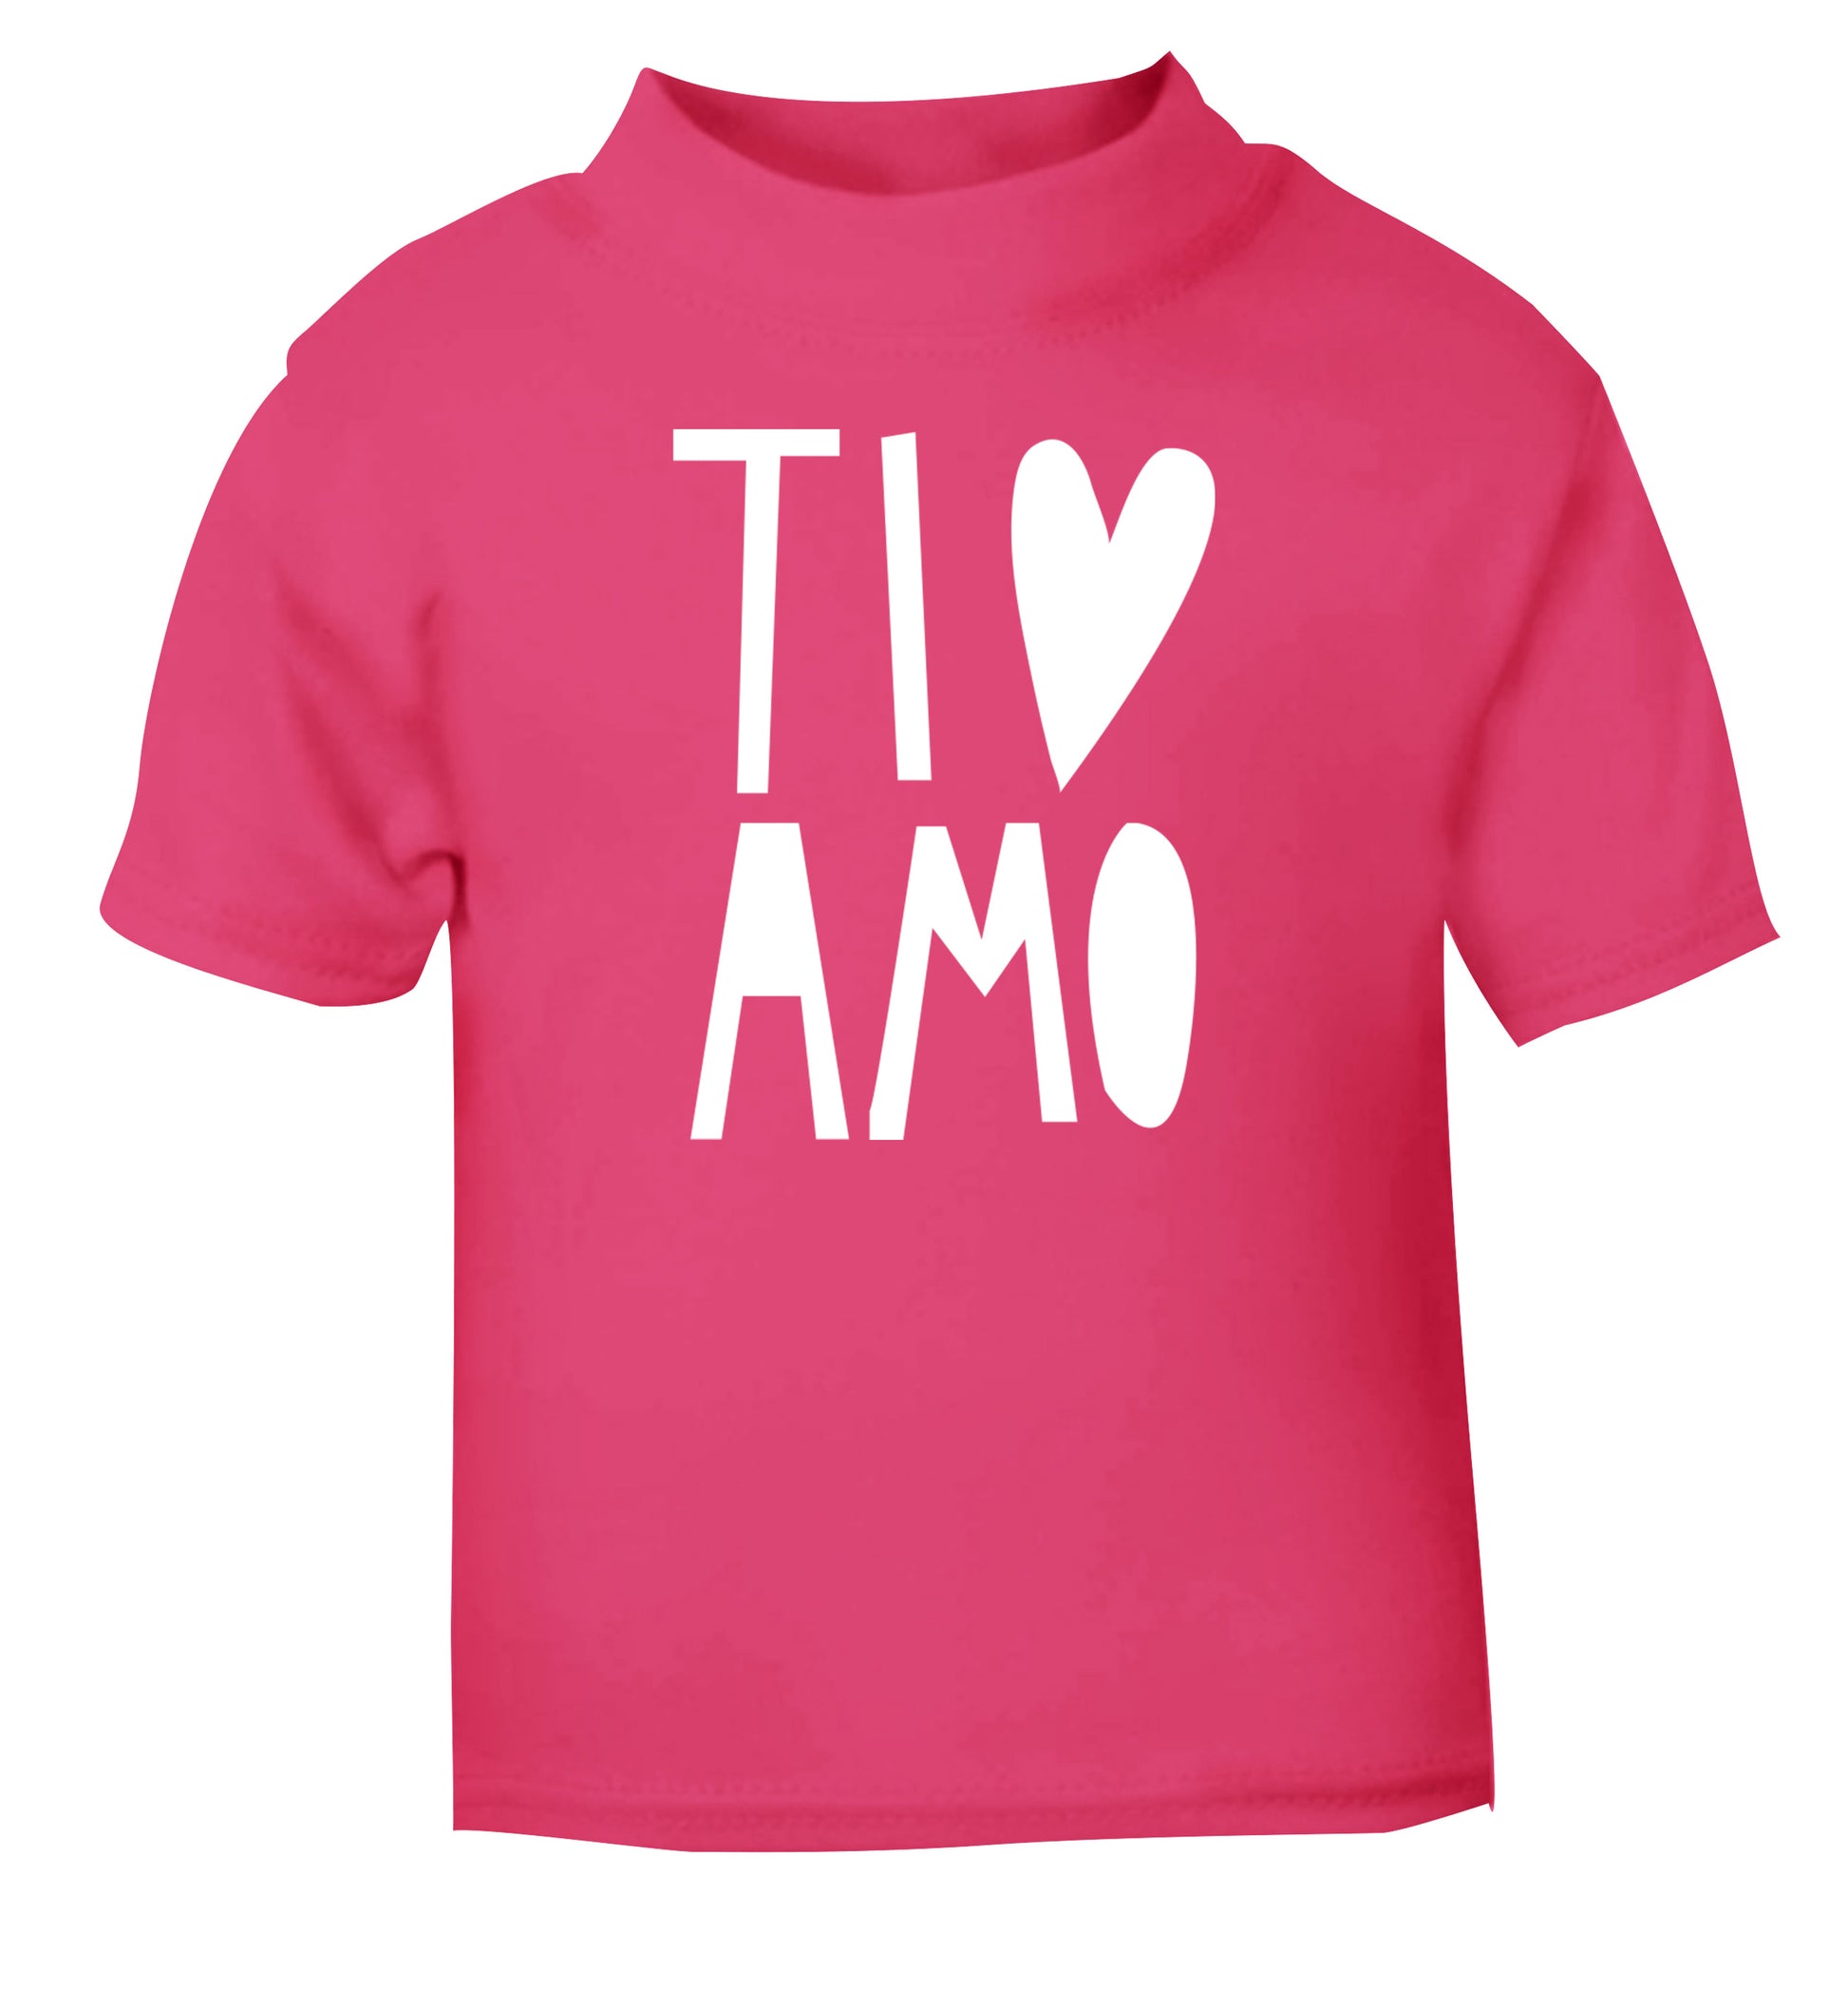 Ti amo - I love you pink Baby Toddler Tshirt 2 Years